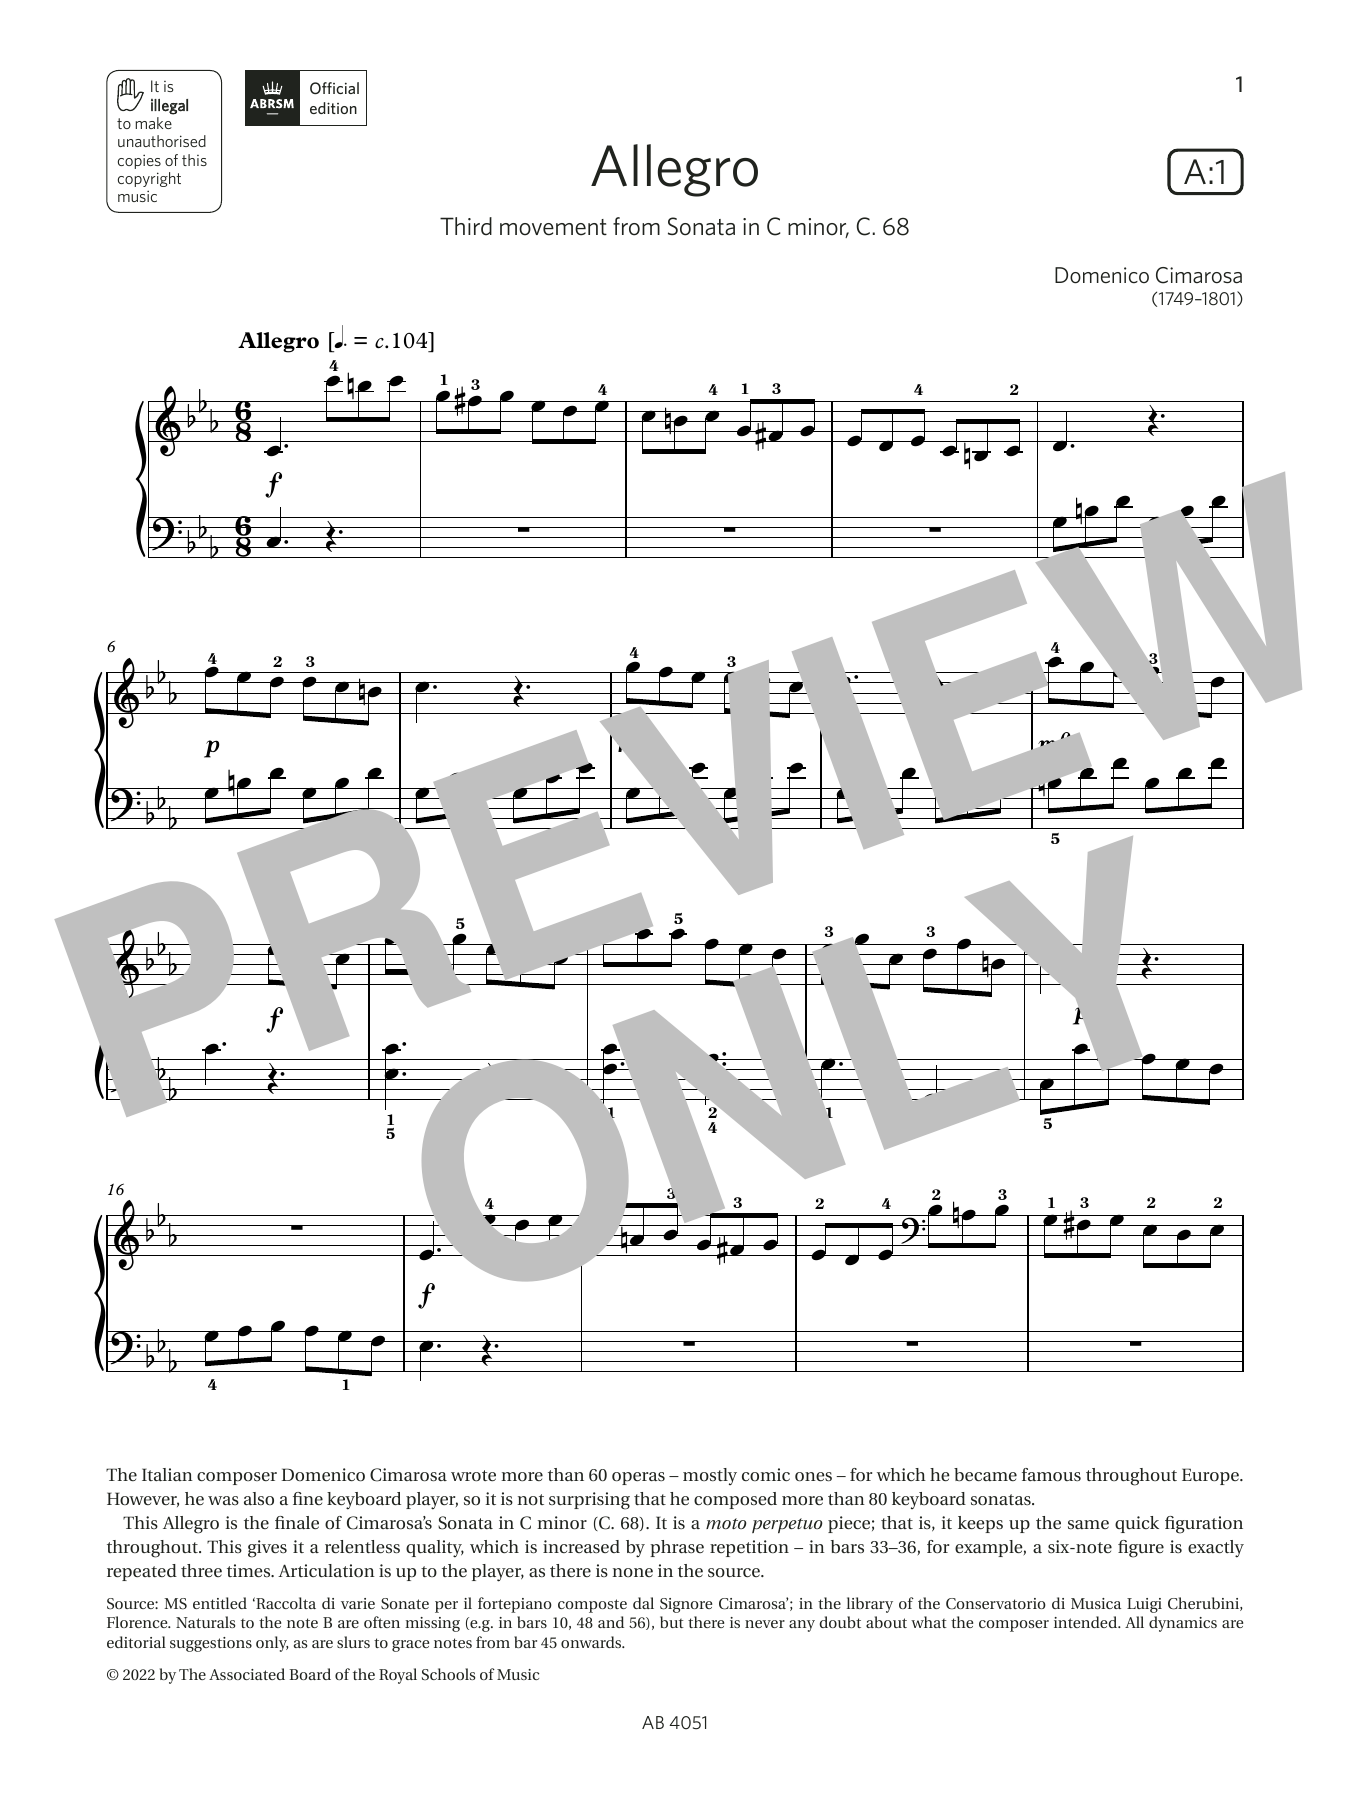 Download Domenico Cimarosa Allegro (Grade 5, list A1, from the ABR Sheet Music